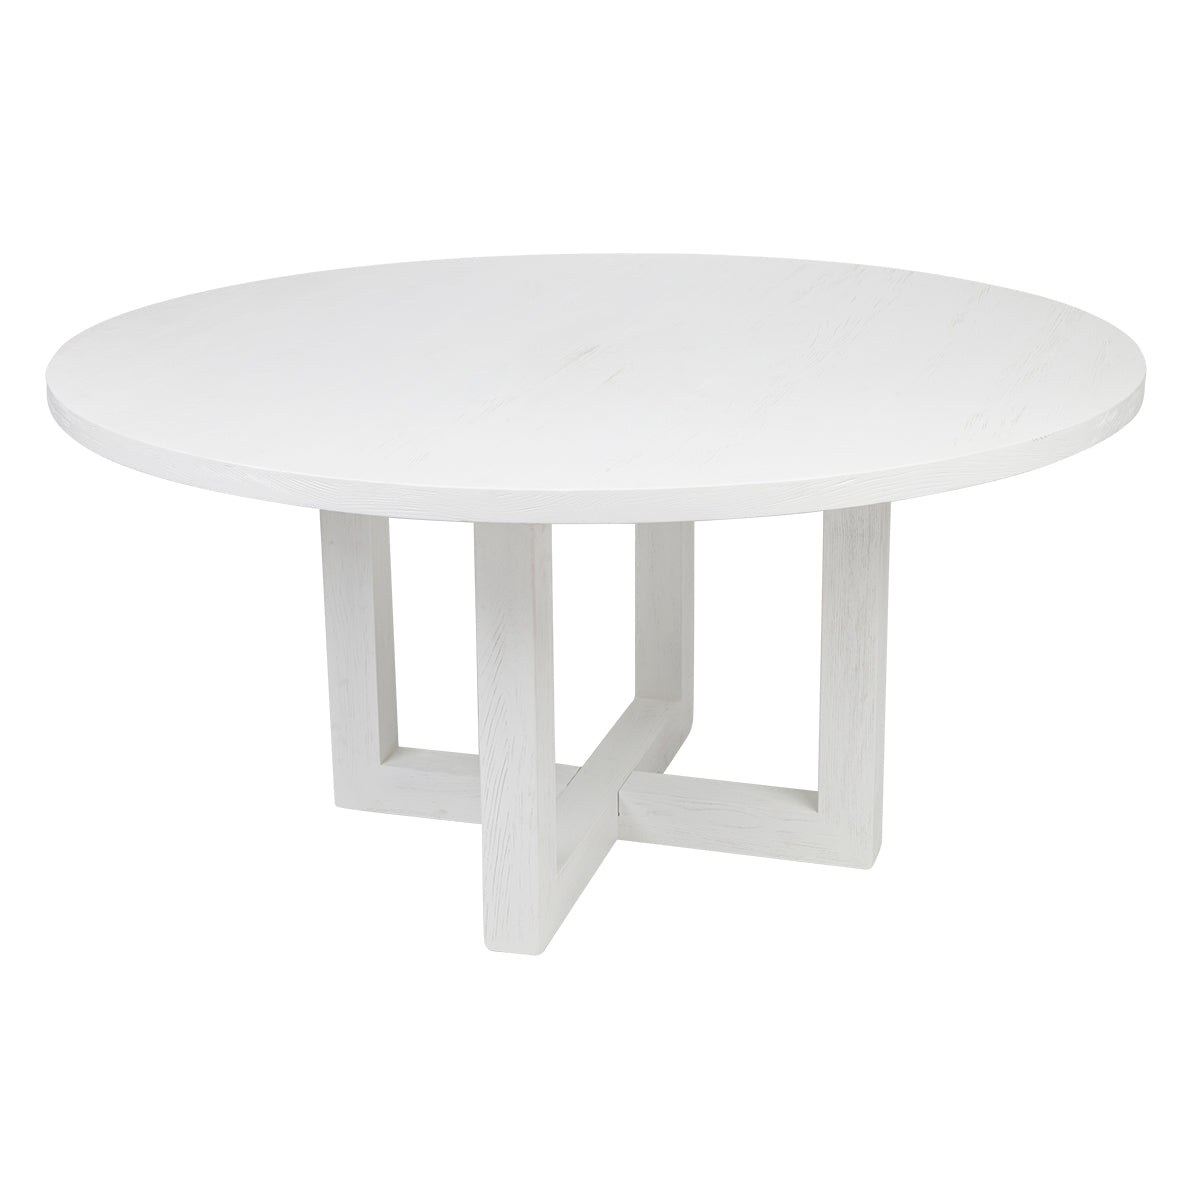 Leeton Round Dining Table - White